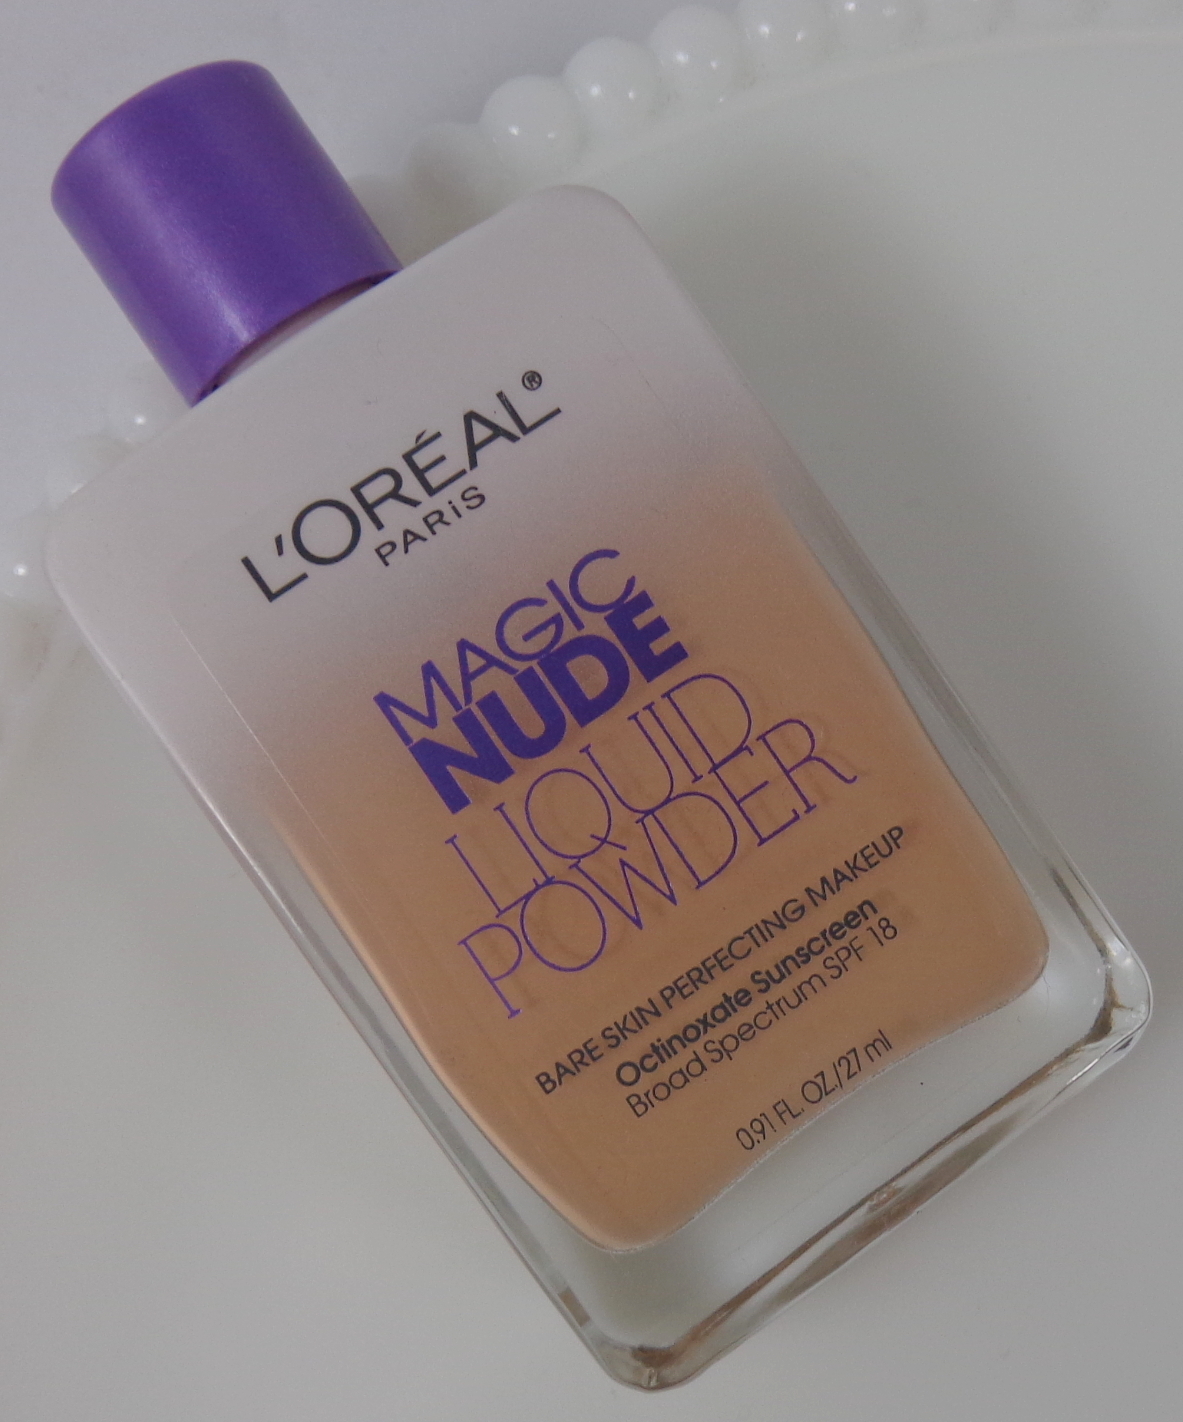 LOreal Paris Magic Nude Liquid Powder Foundation: Review 